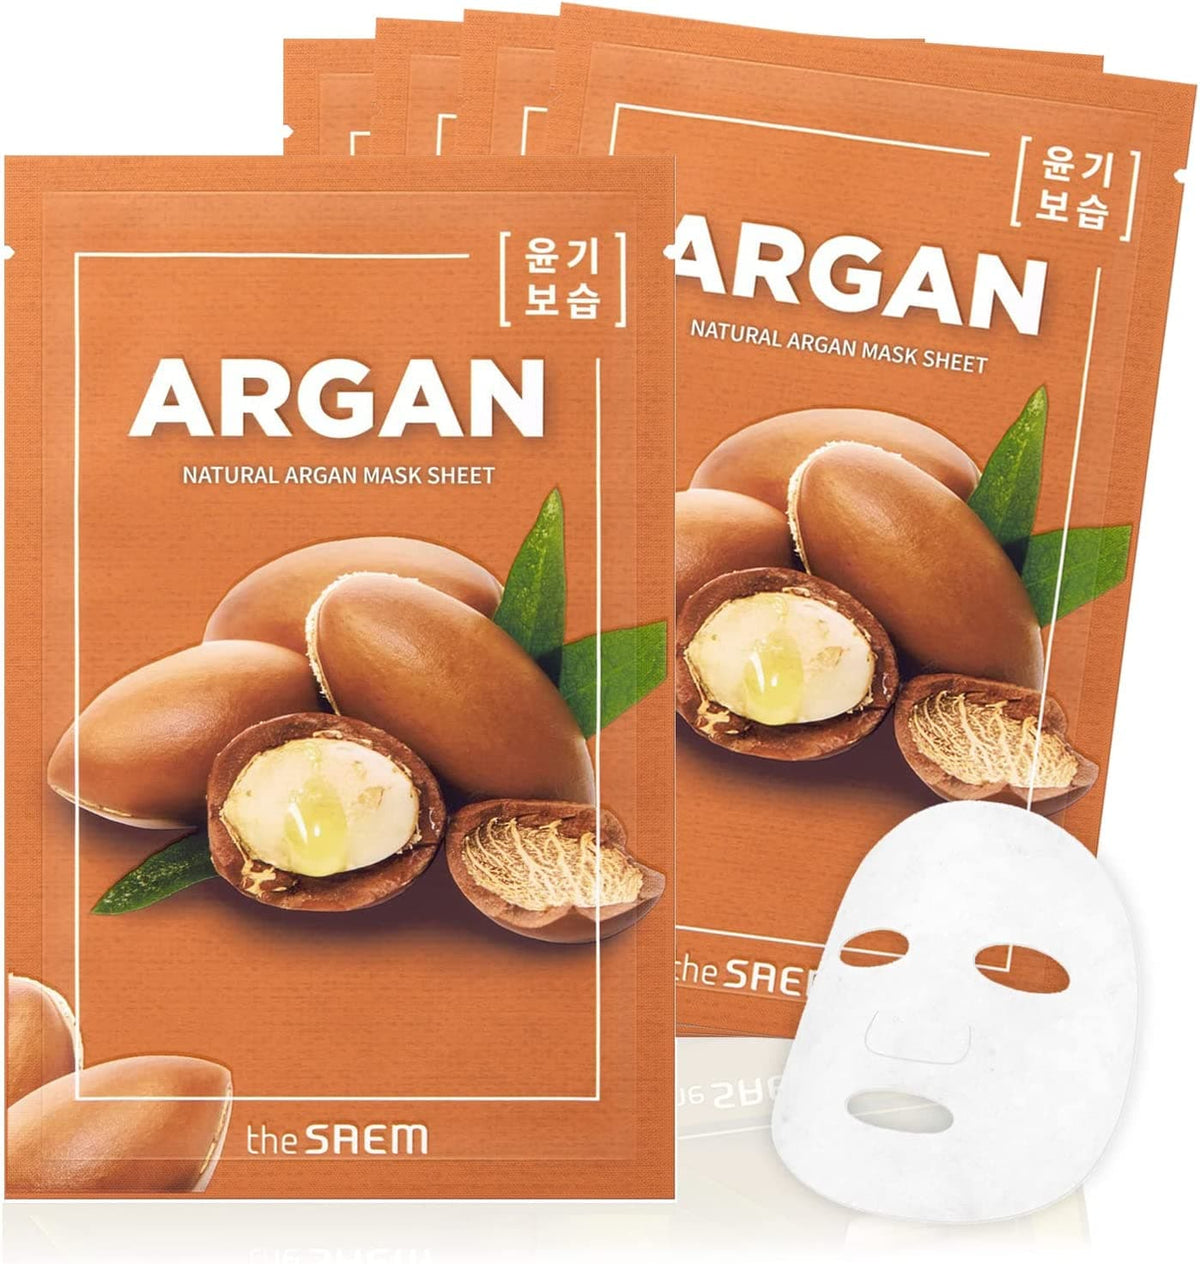 Natural Argan Mask Sheet